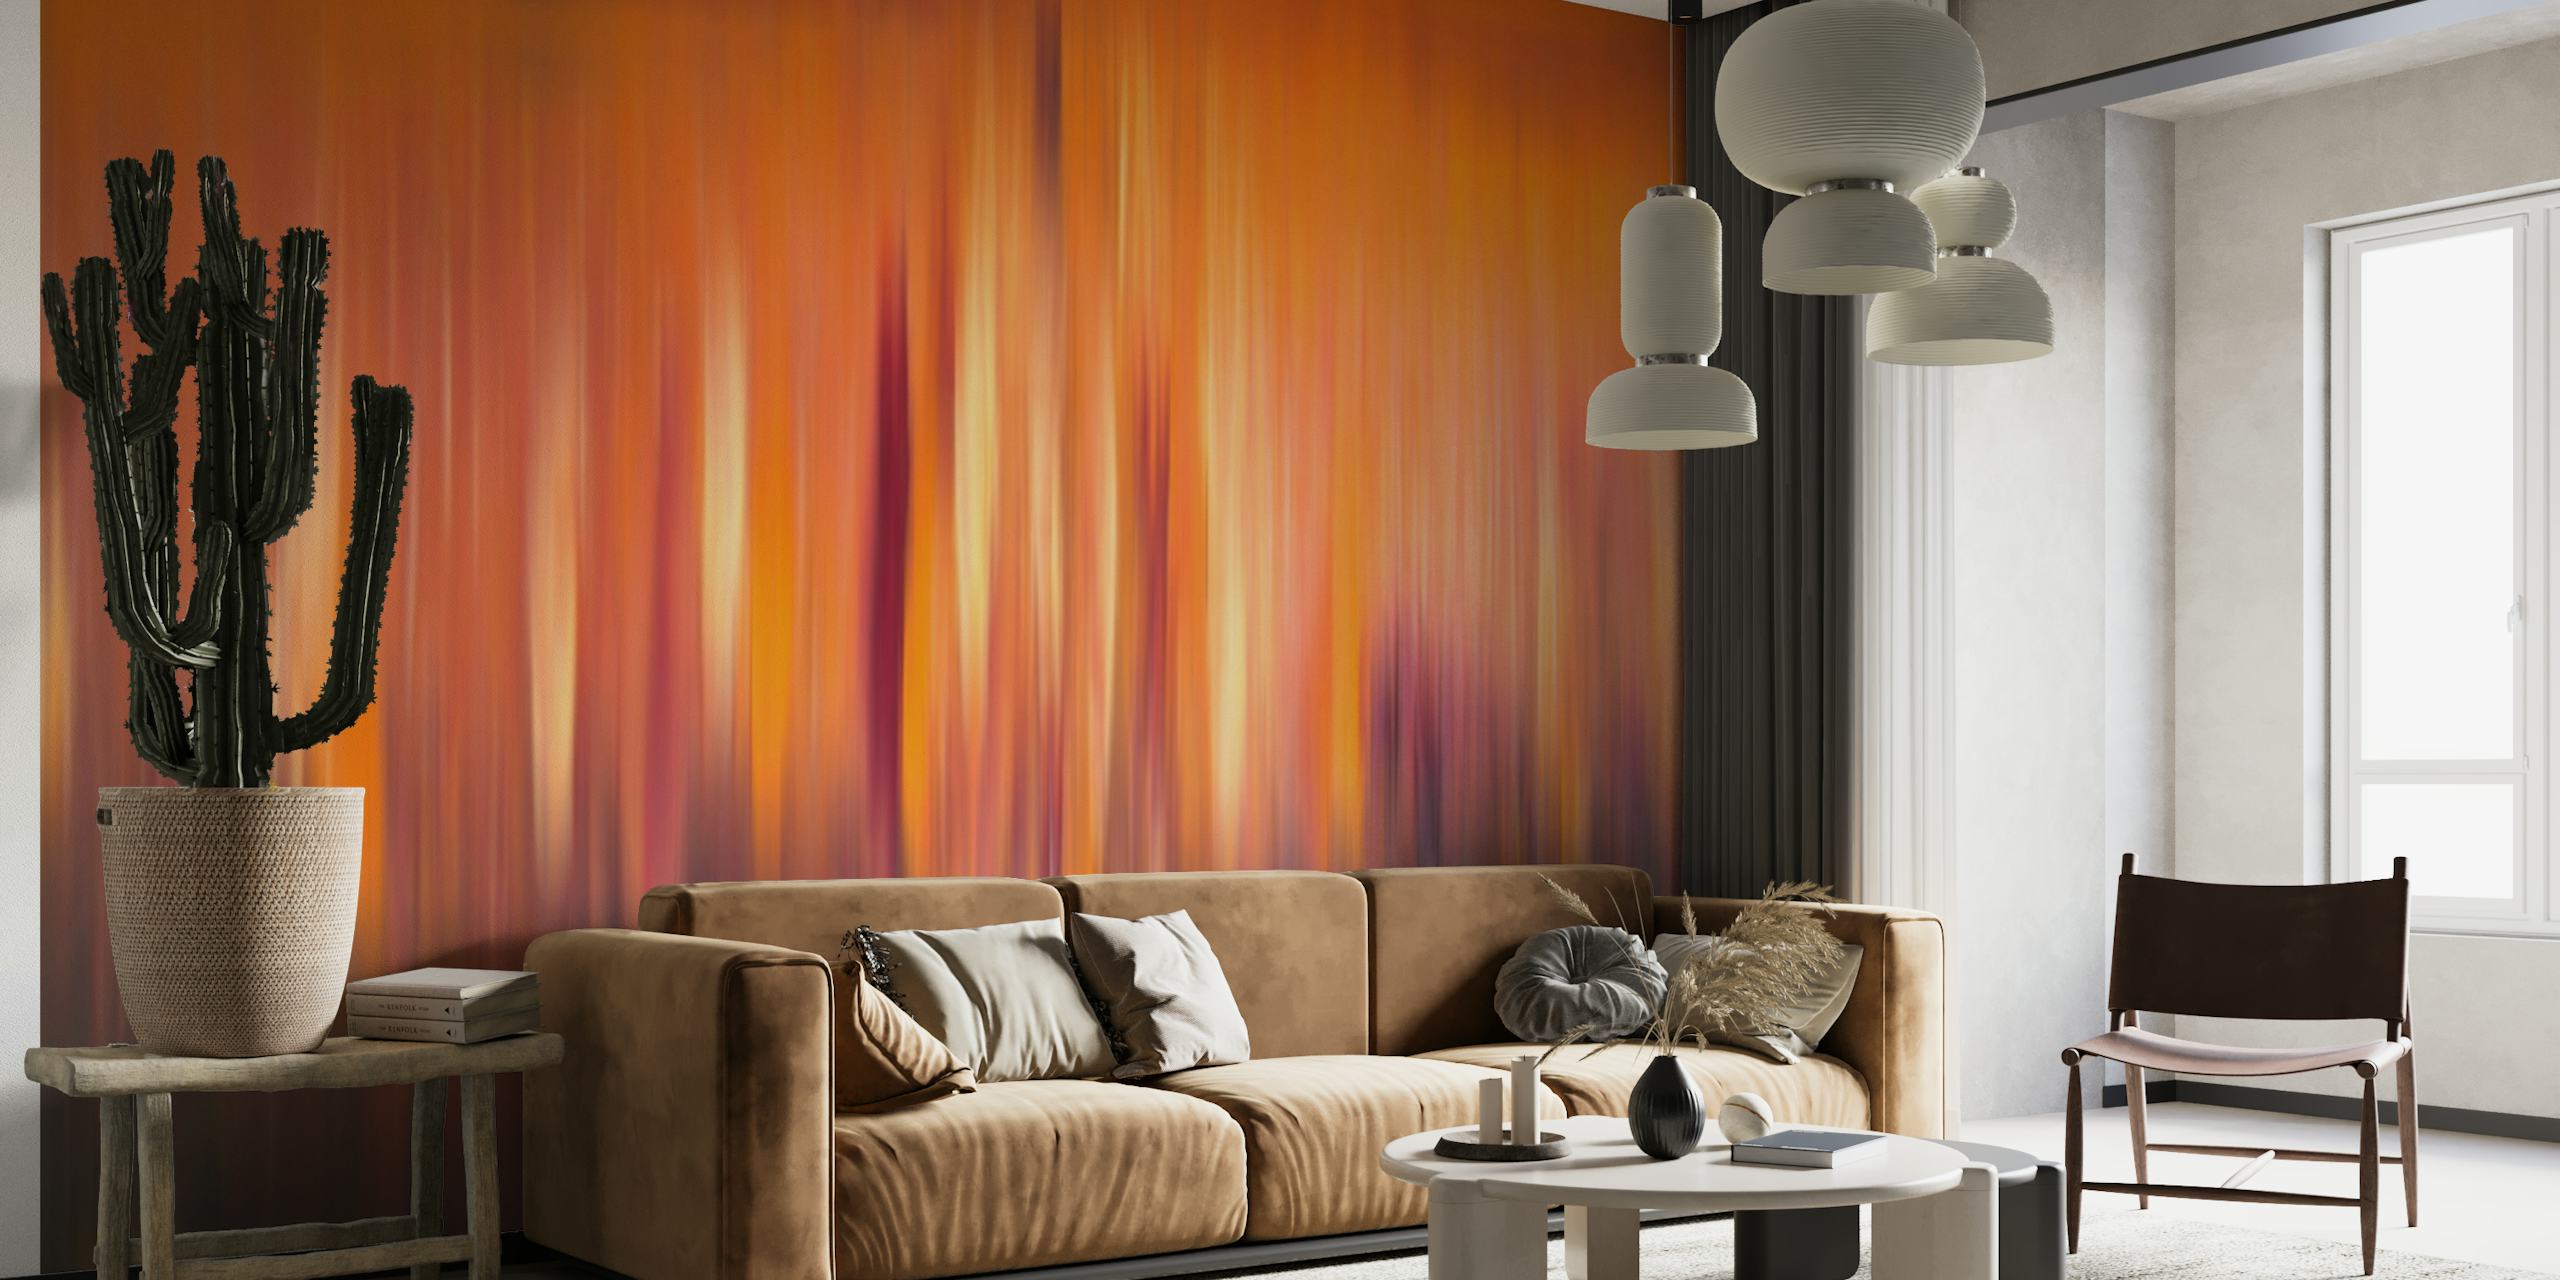 Mural de pared abstracto, atrevido y colorido con pinceladas vibrantes